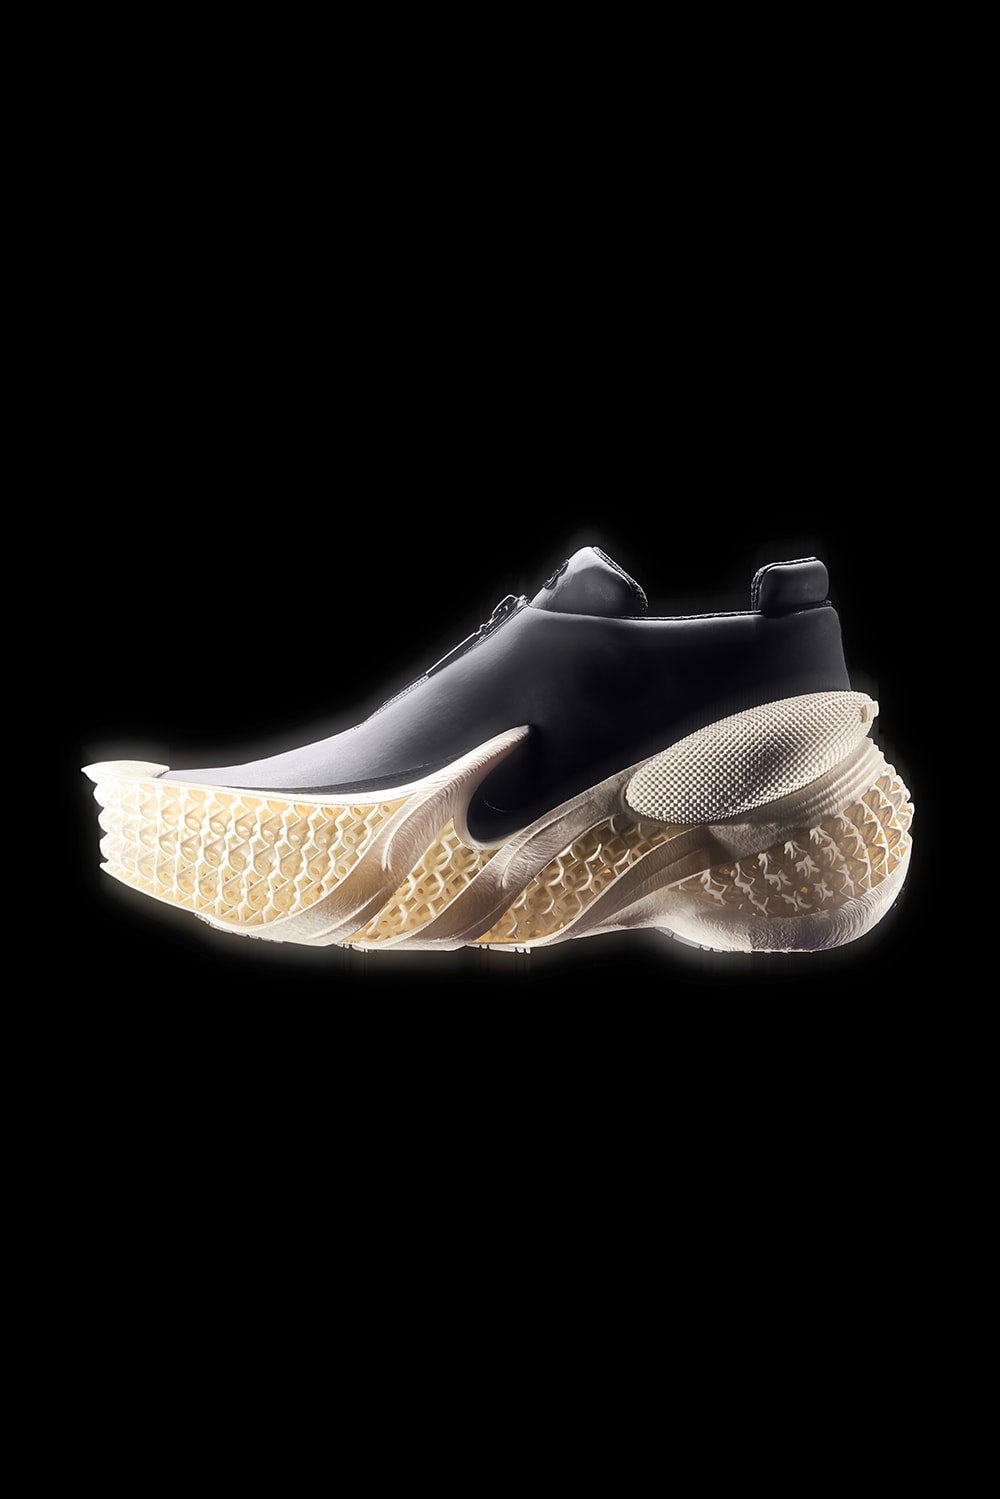 NAMESAKE 首雙 3D 打印鞋款系列「CLIPPERS」正式上架